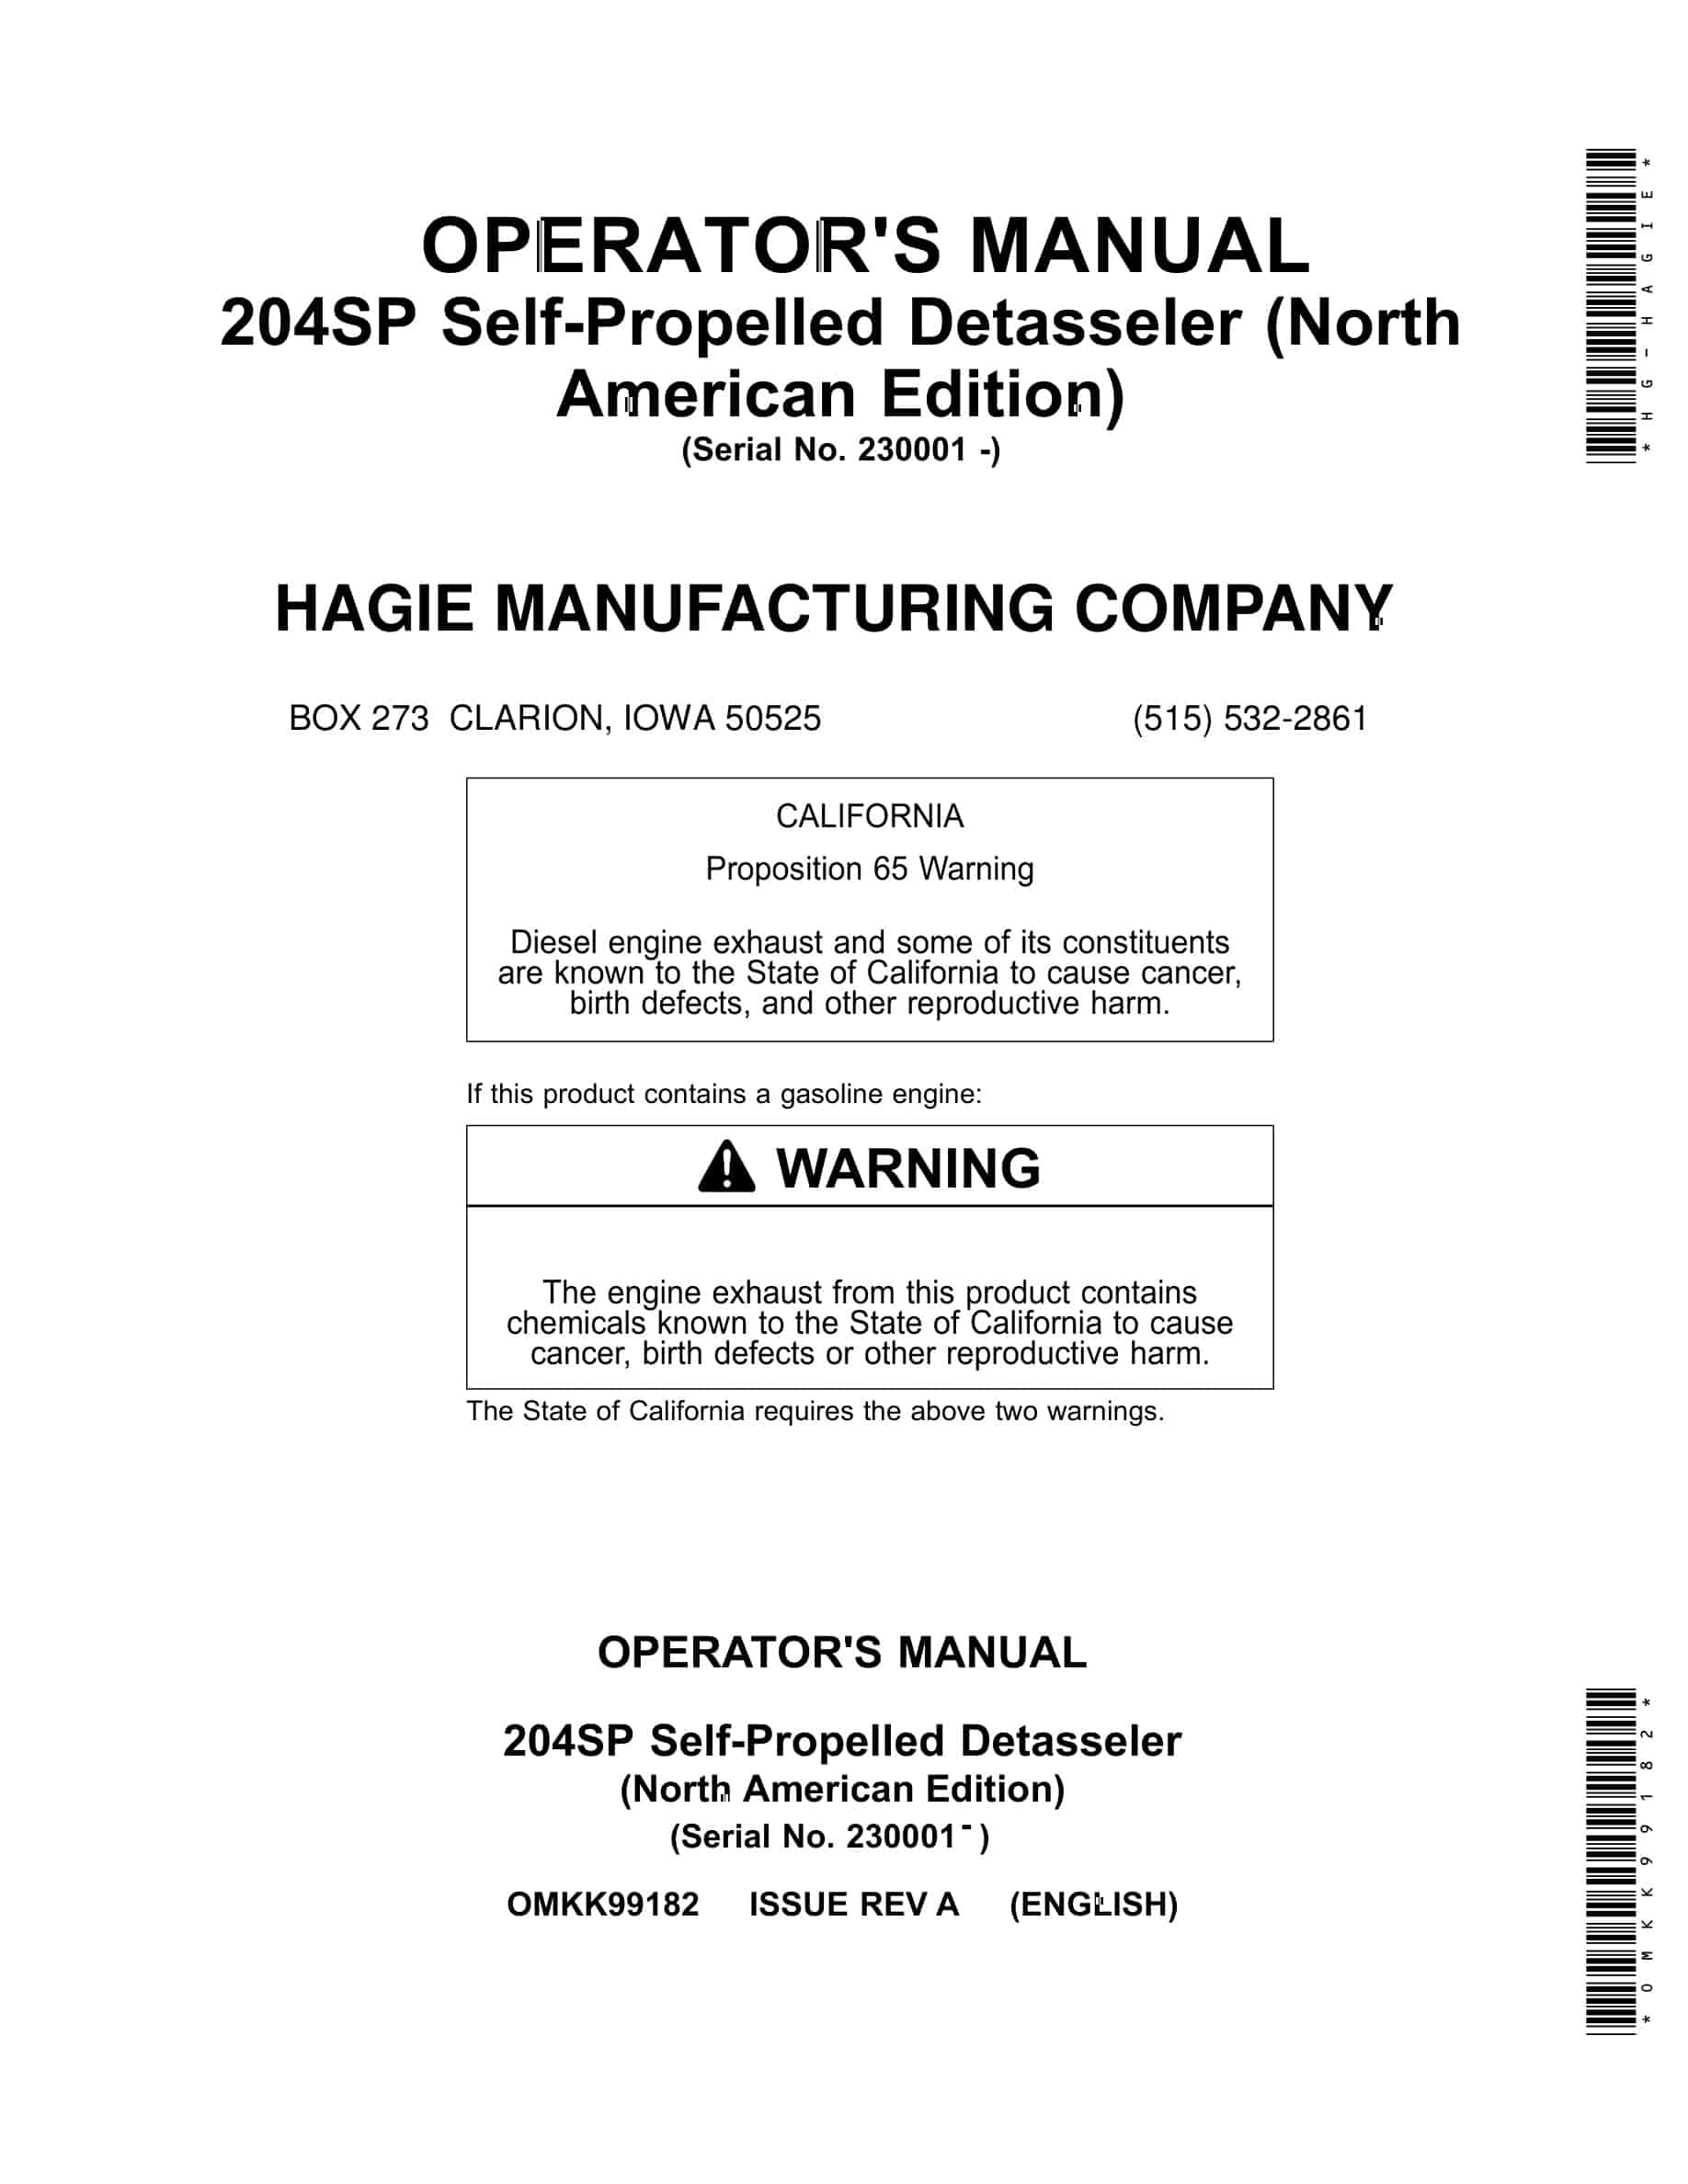 John Deere 204SP Self-Propelled Detasseler Operator Manual OMKK99182-1